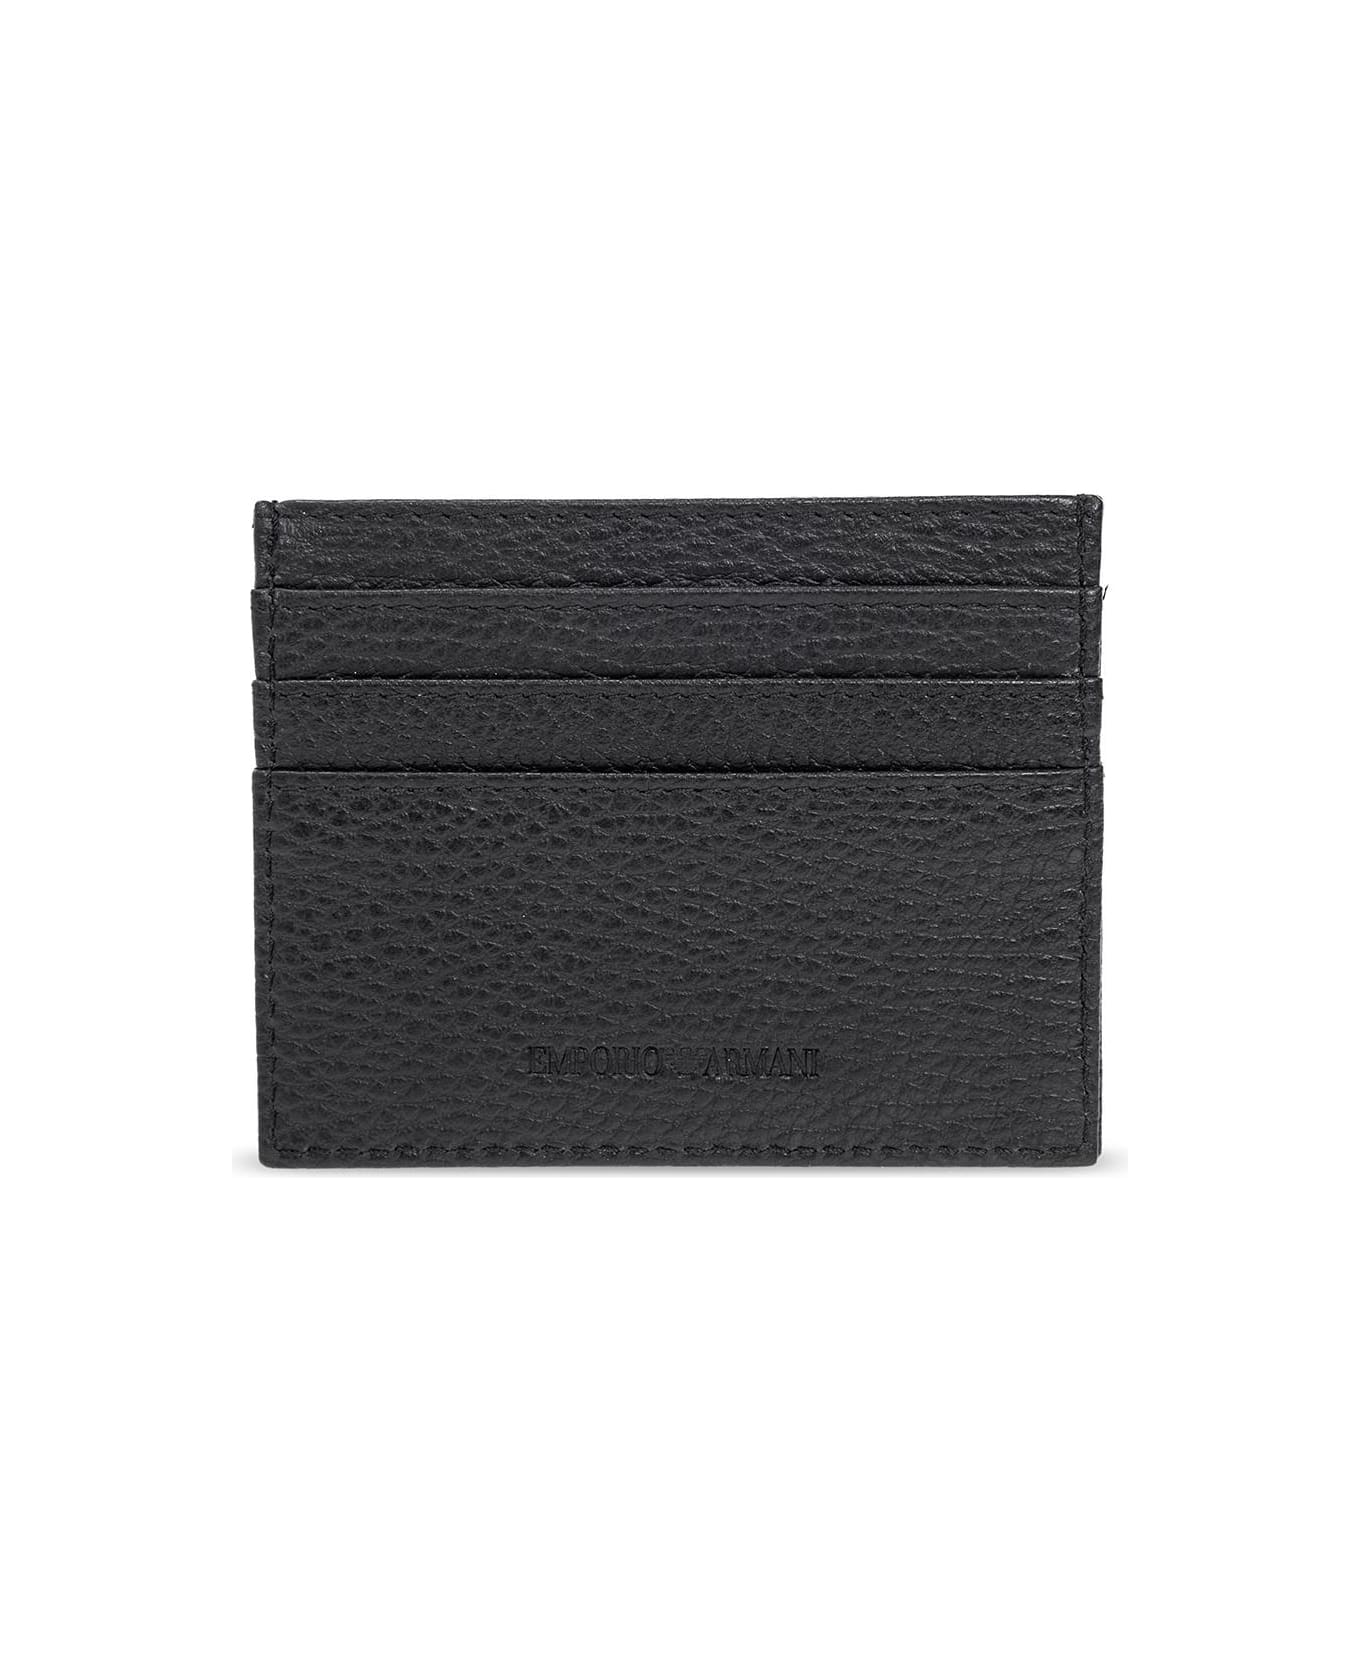 Emporio Armani Wallet And Card Holder Case - Nero